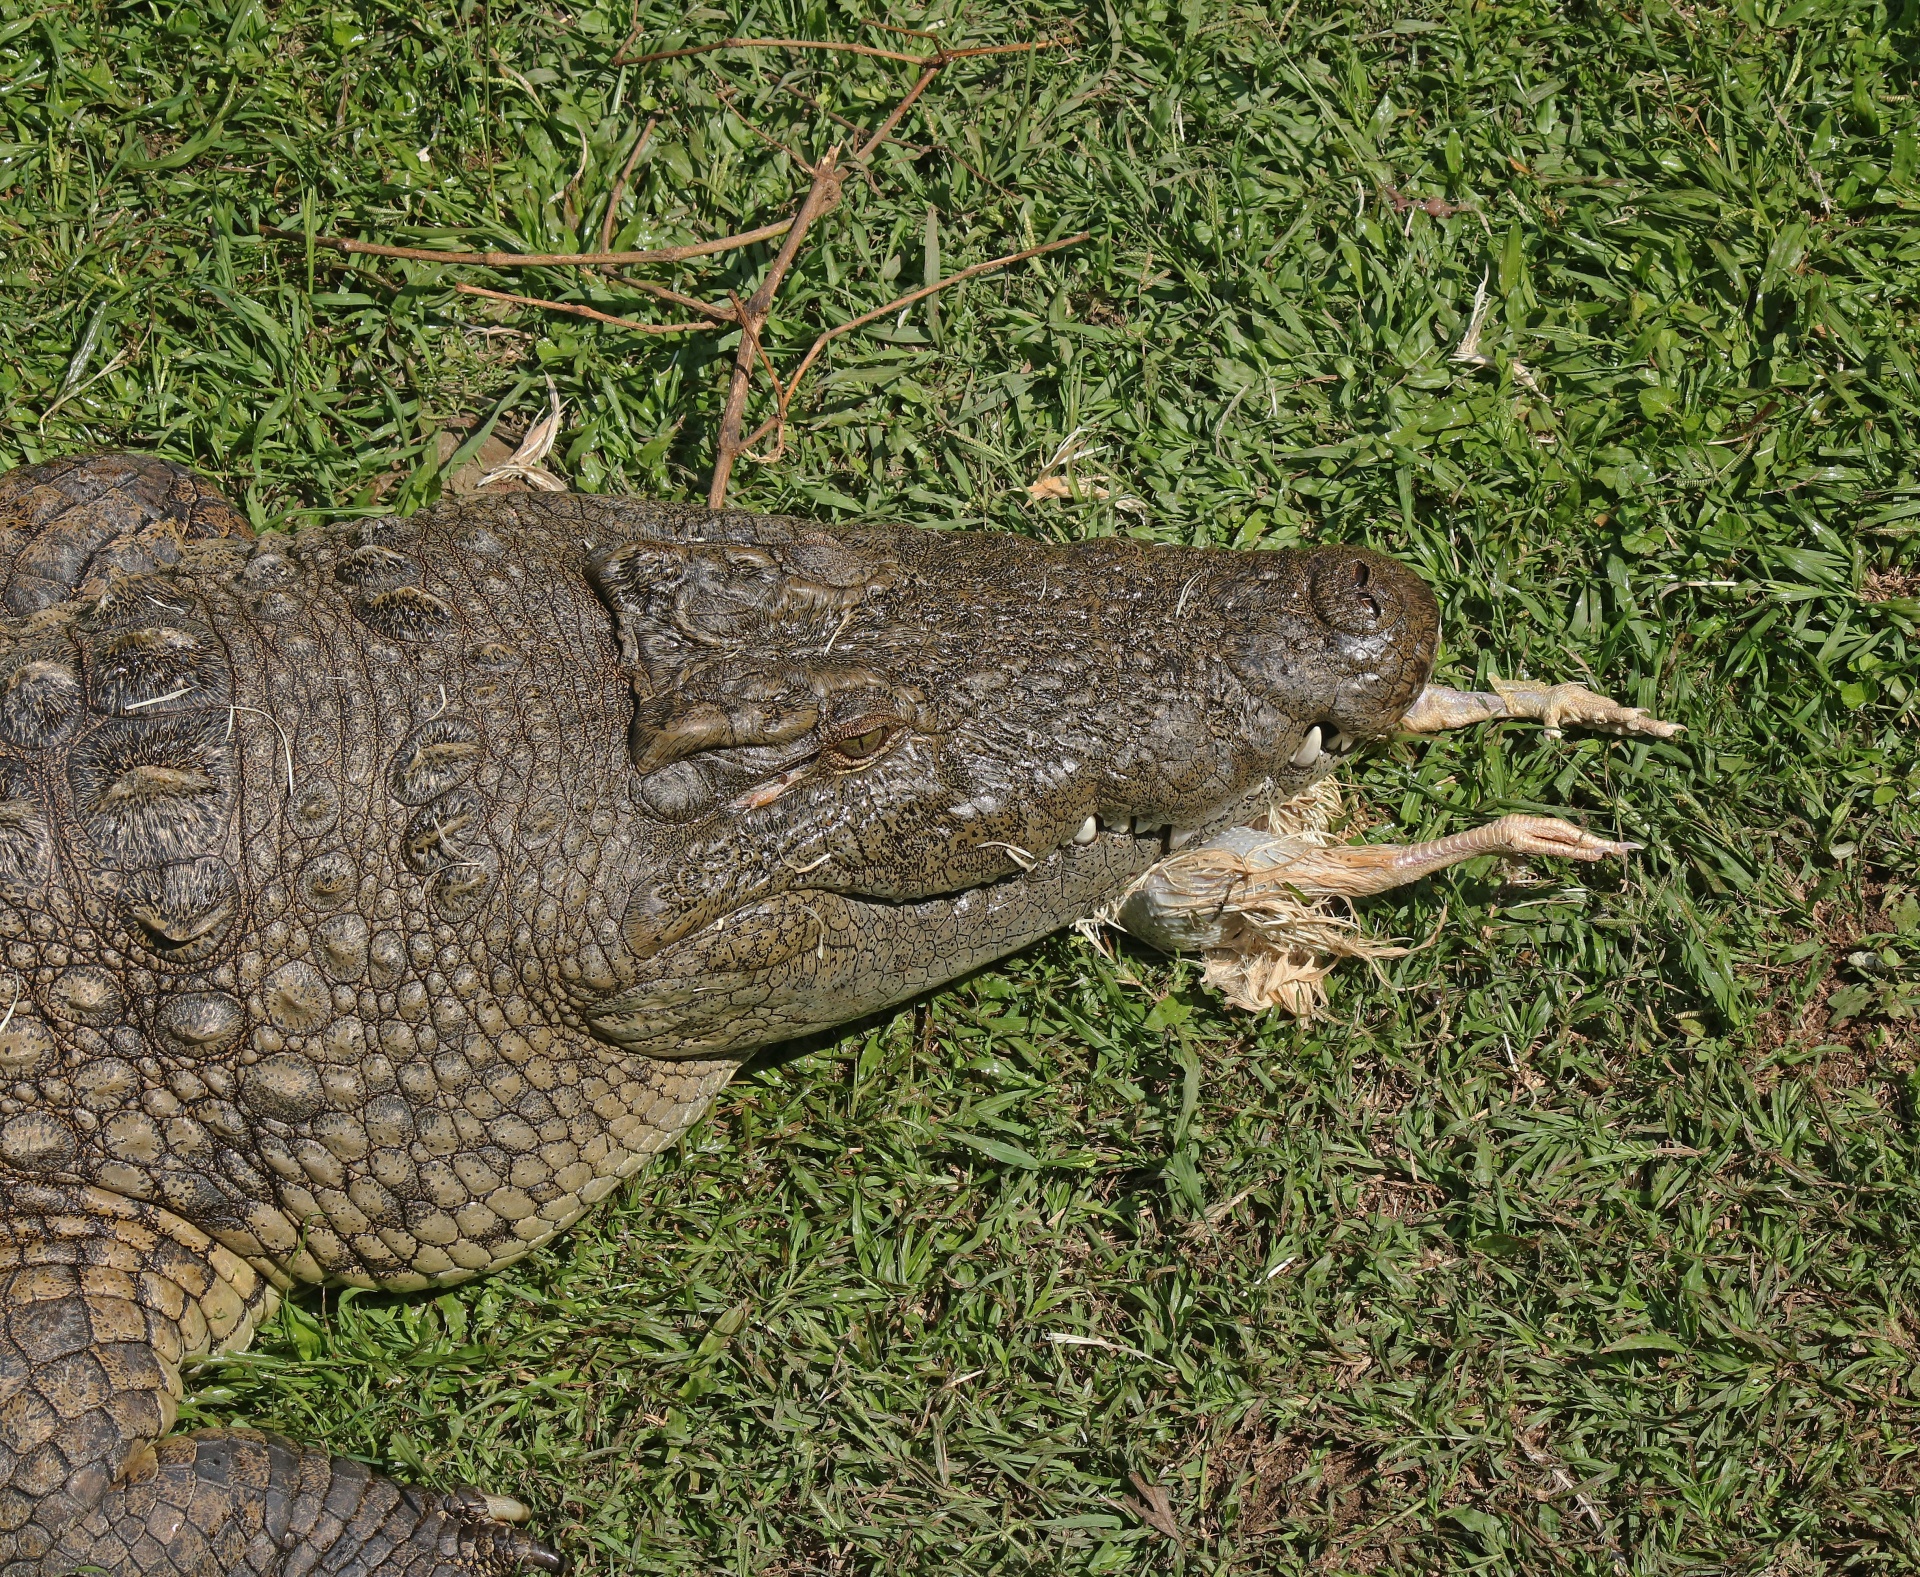 Nile Crocodile Being Fed A Chicken